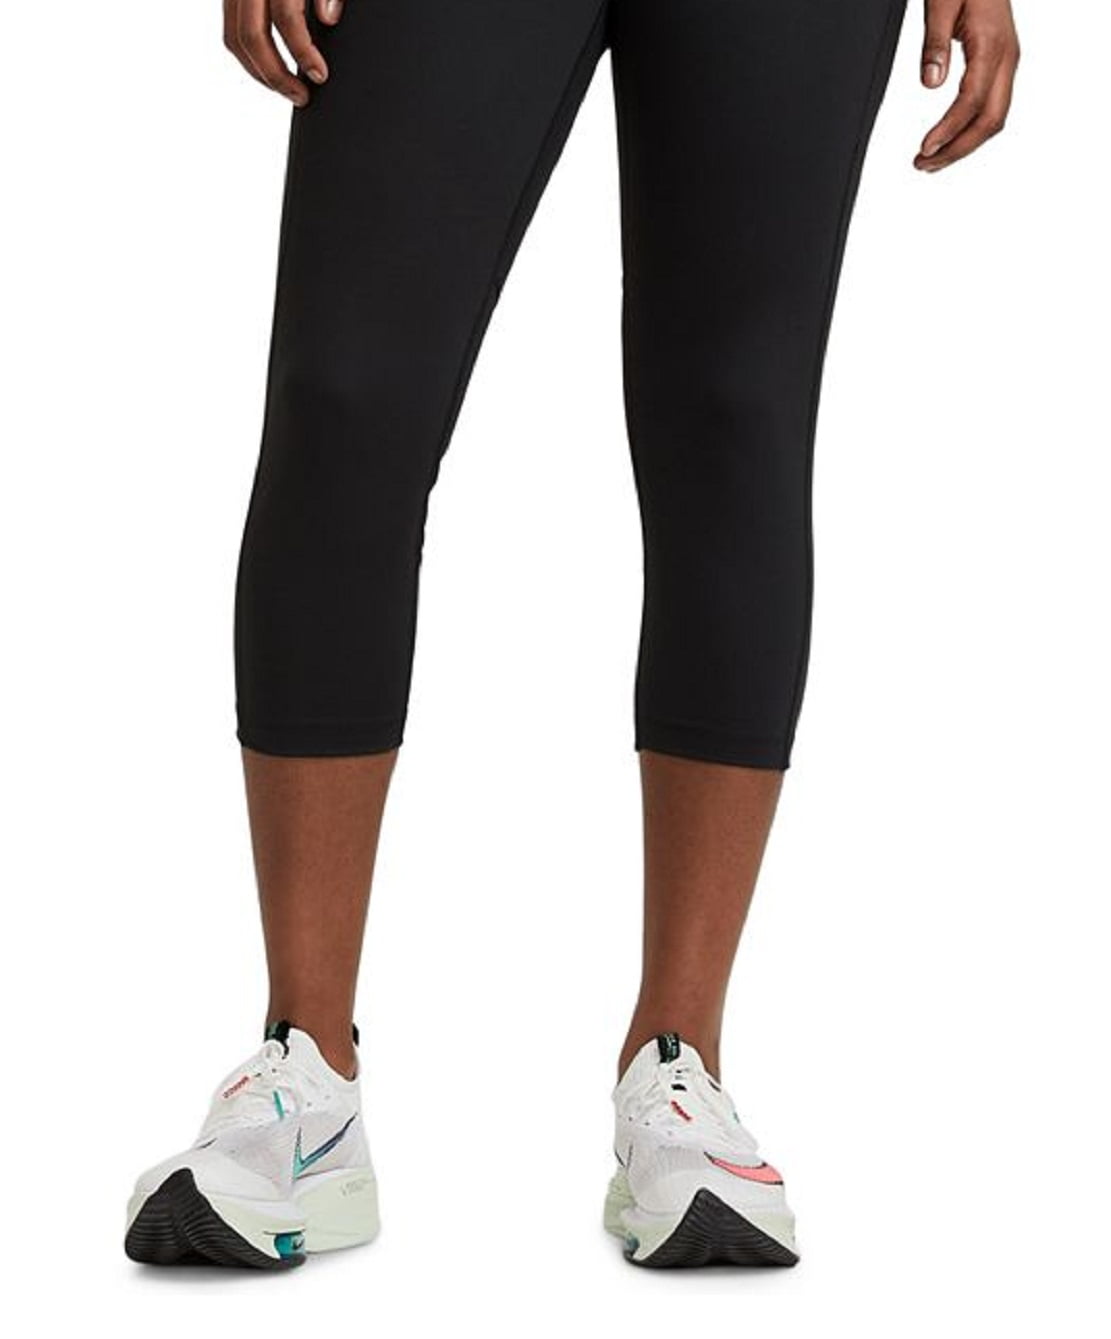 Nike Women's Running Cropped Leggings Black Size 2X 